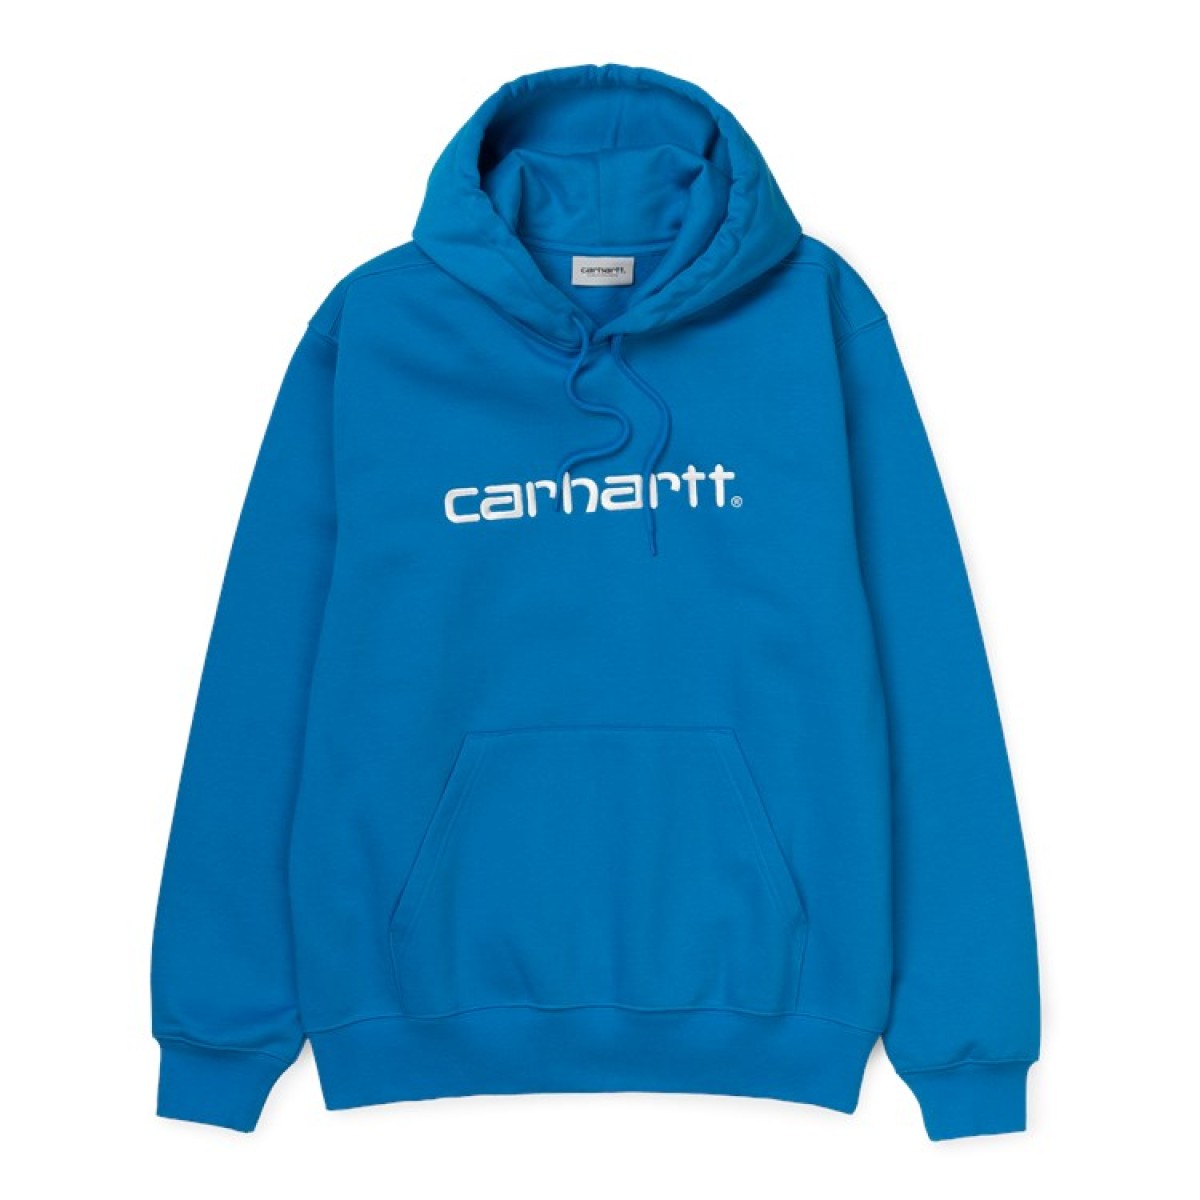 Carhartt Wip Hooded Carhartt Sweatshirt Azzuro Blue / White57/43% ...